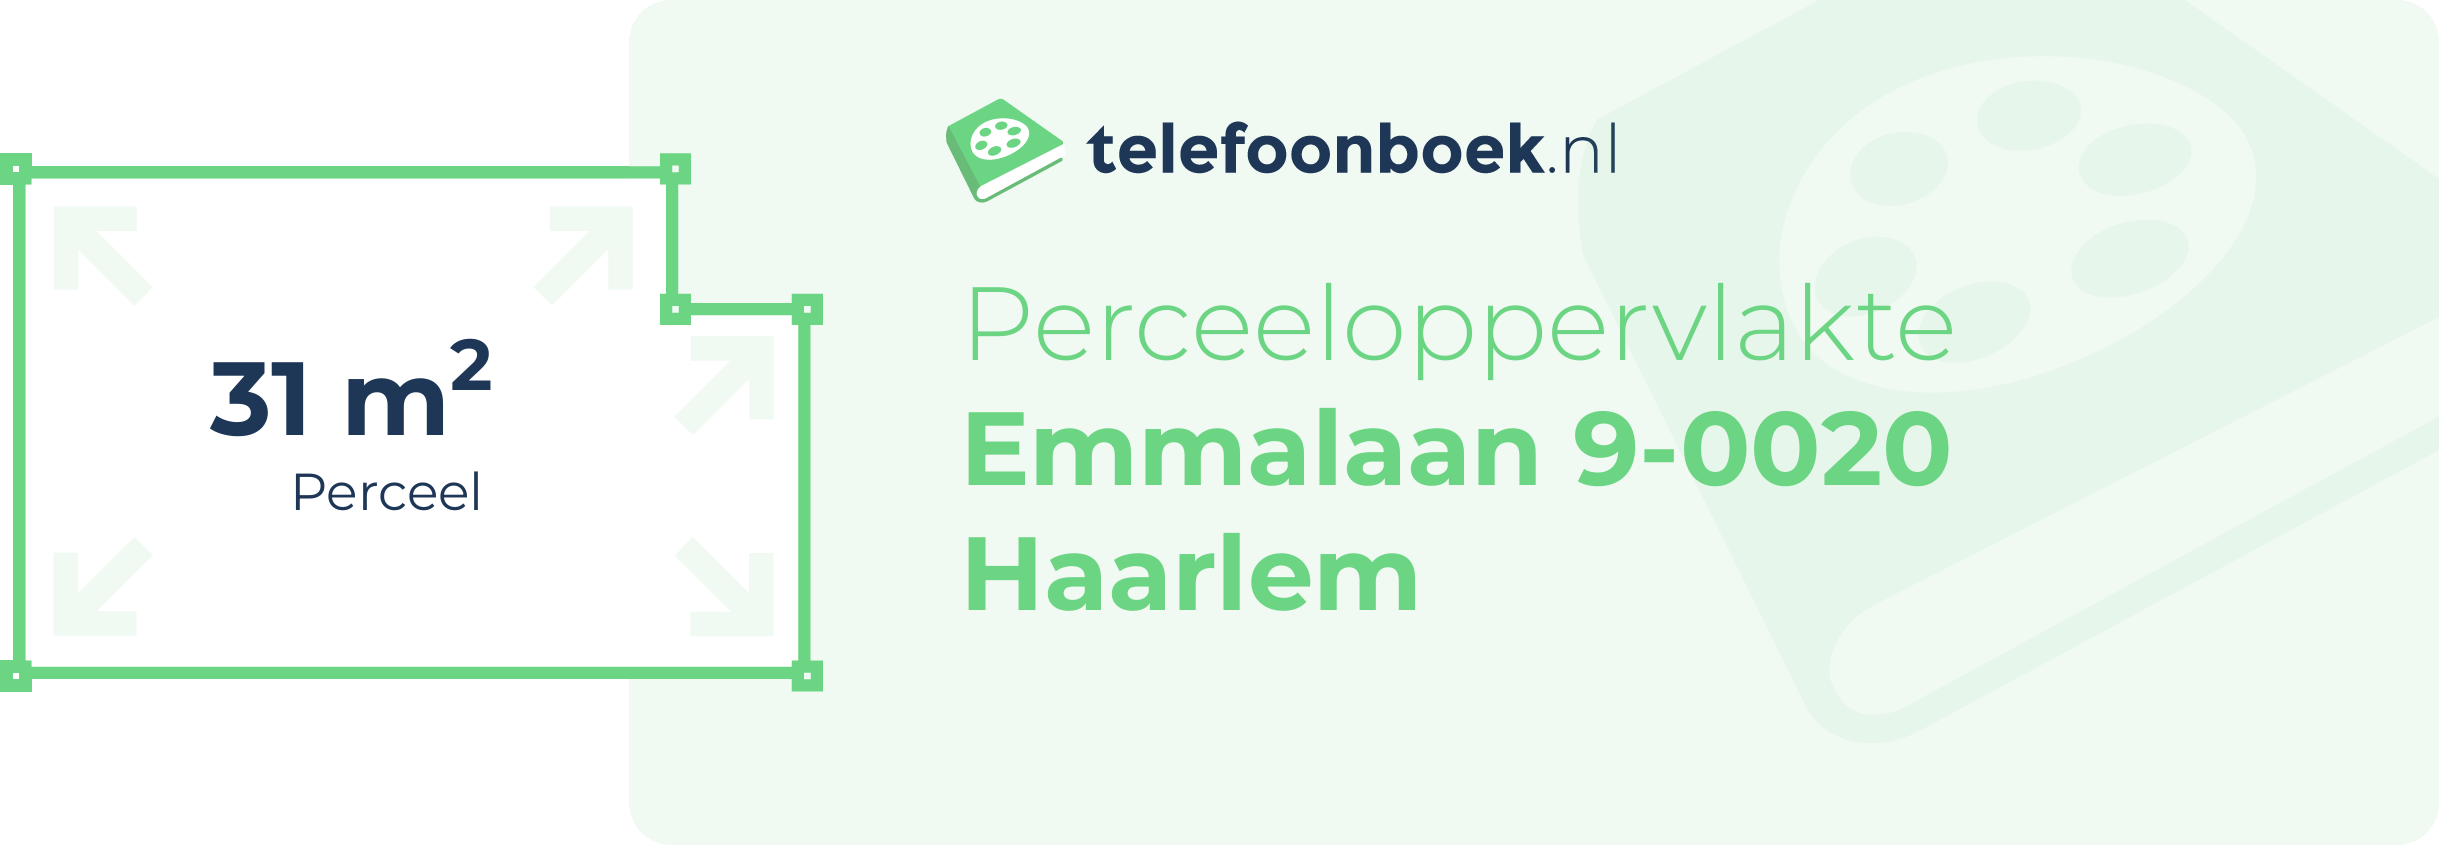 Perceeloppervlakte Emmalaan 9-0020 Haarlem